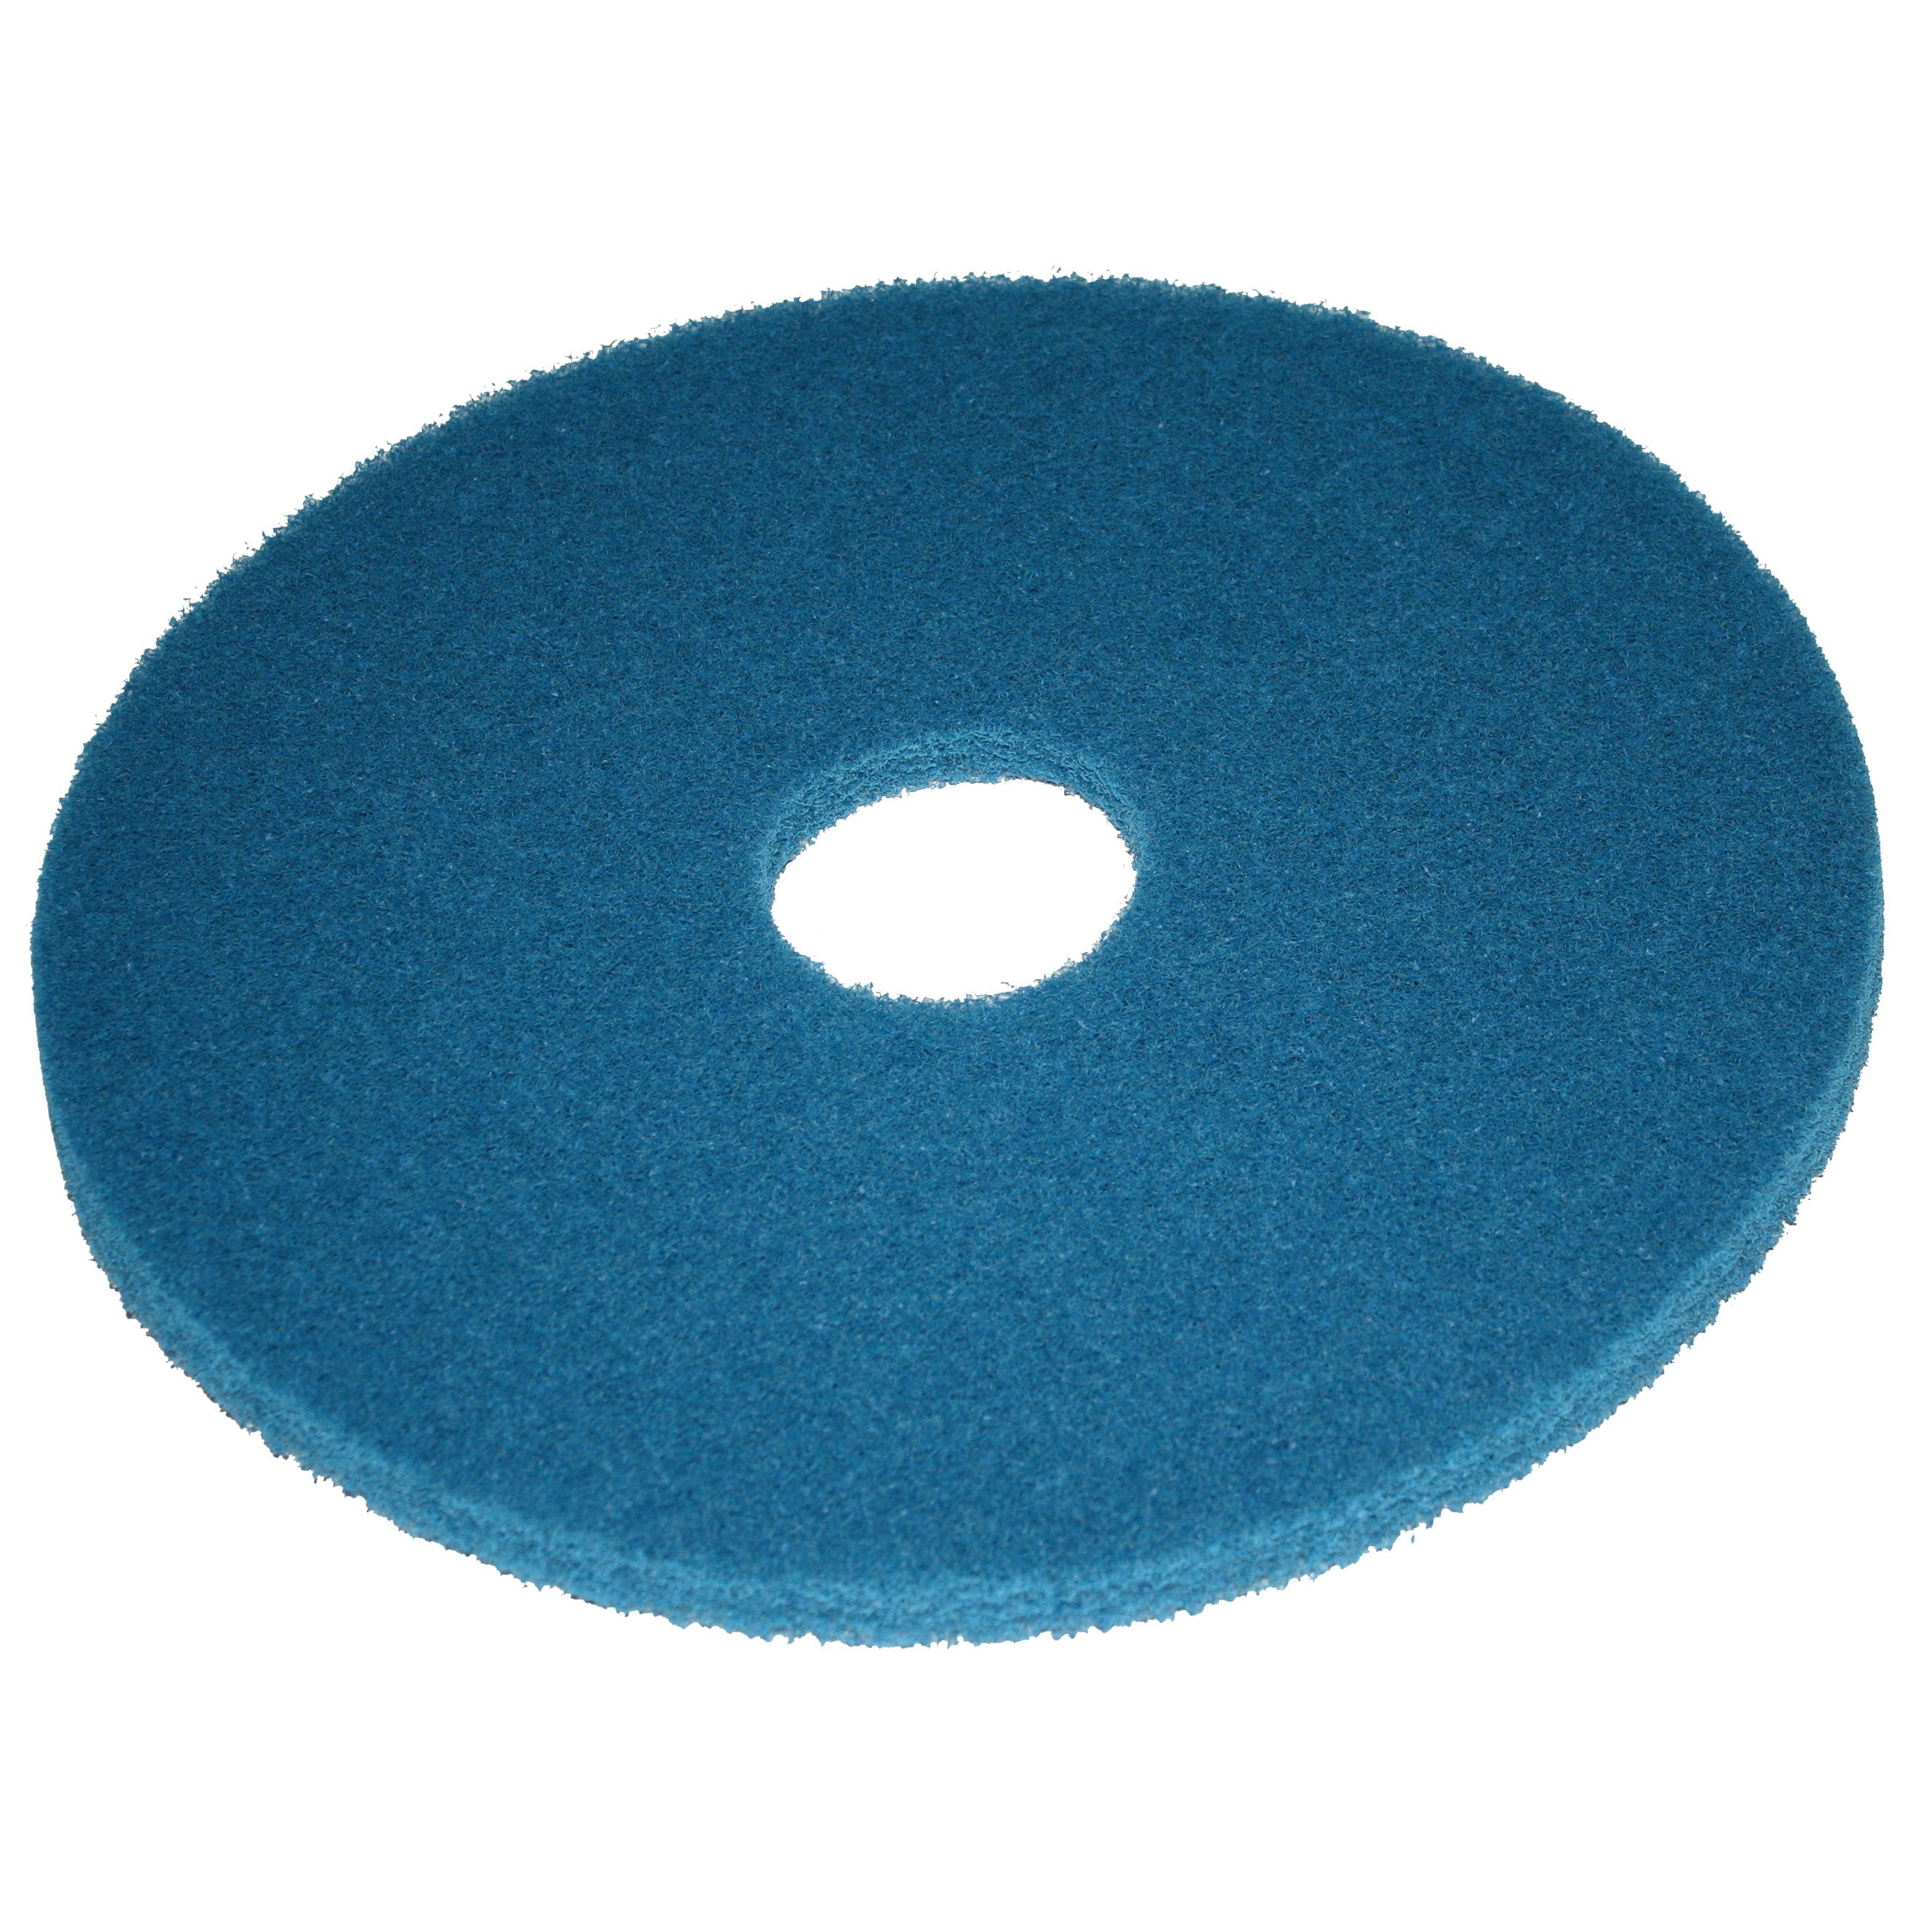 Pad blau, Ø 560 mm, Polyester